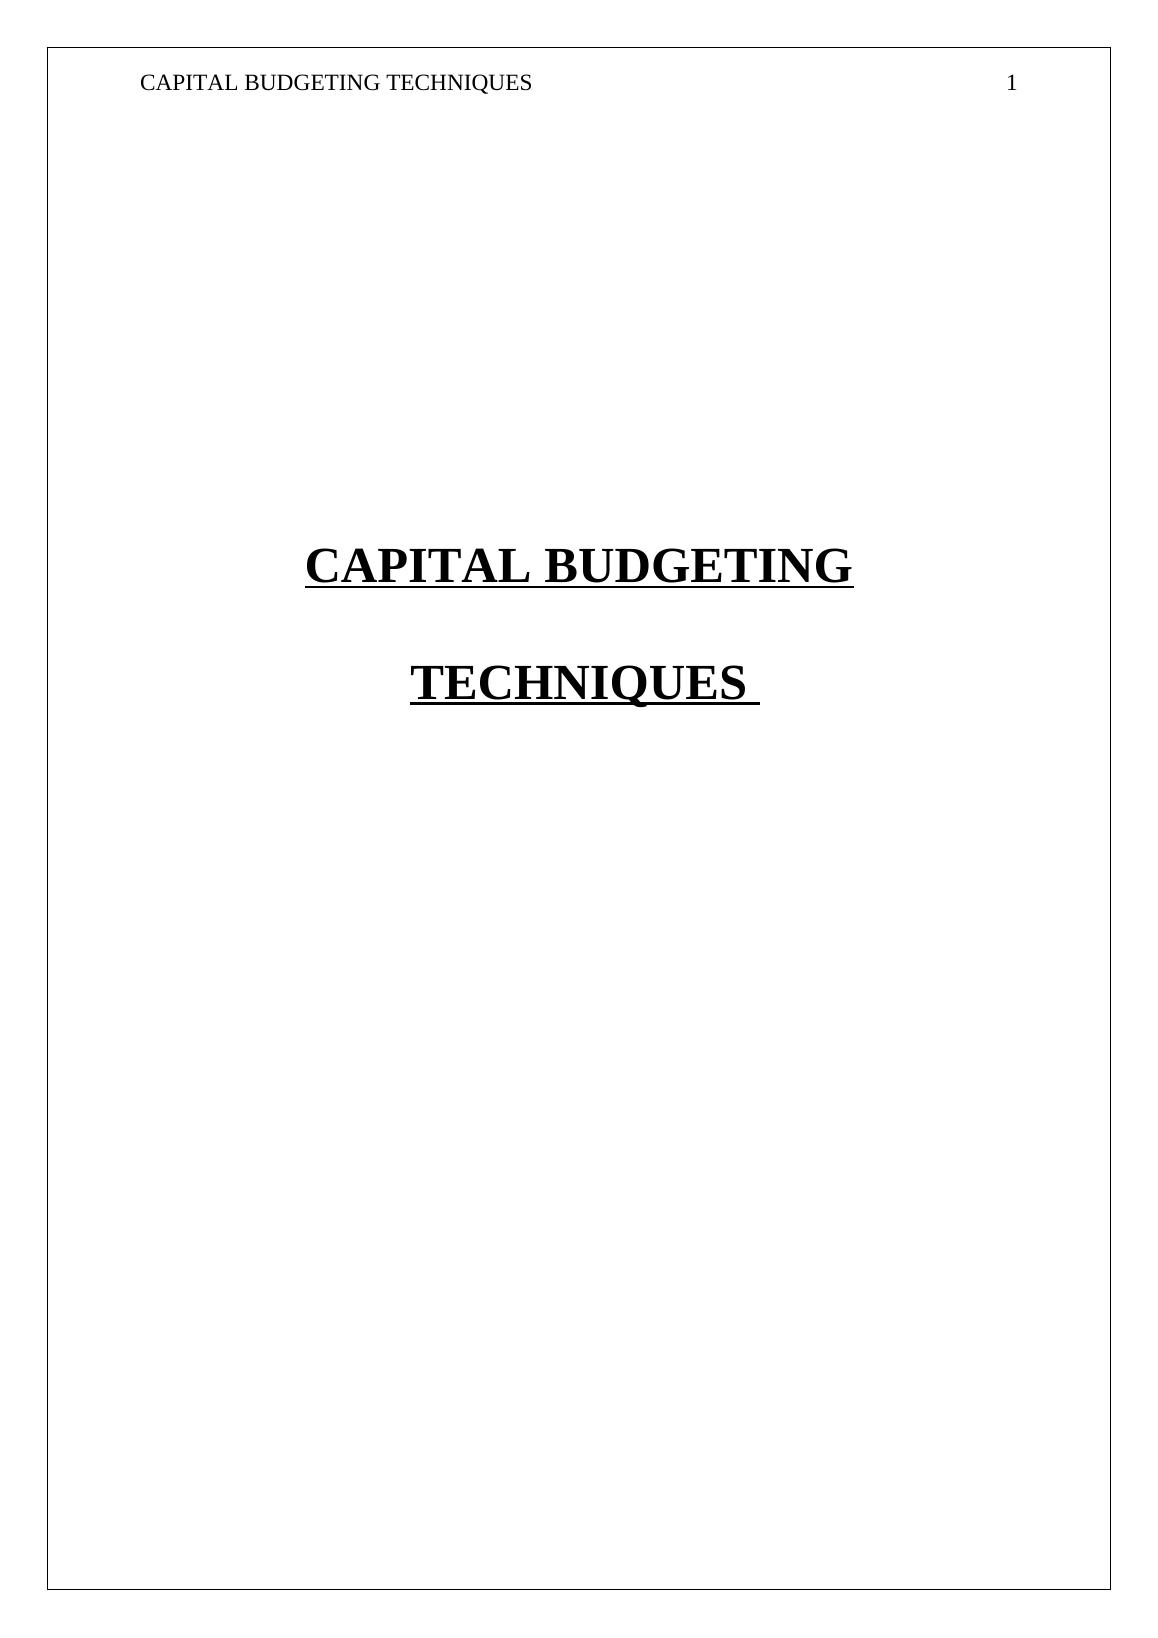 Capital Budgeting Techniques_1